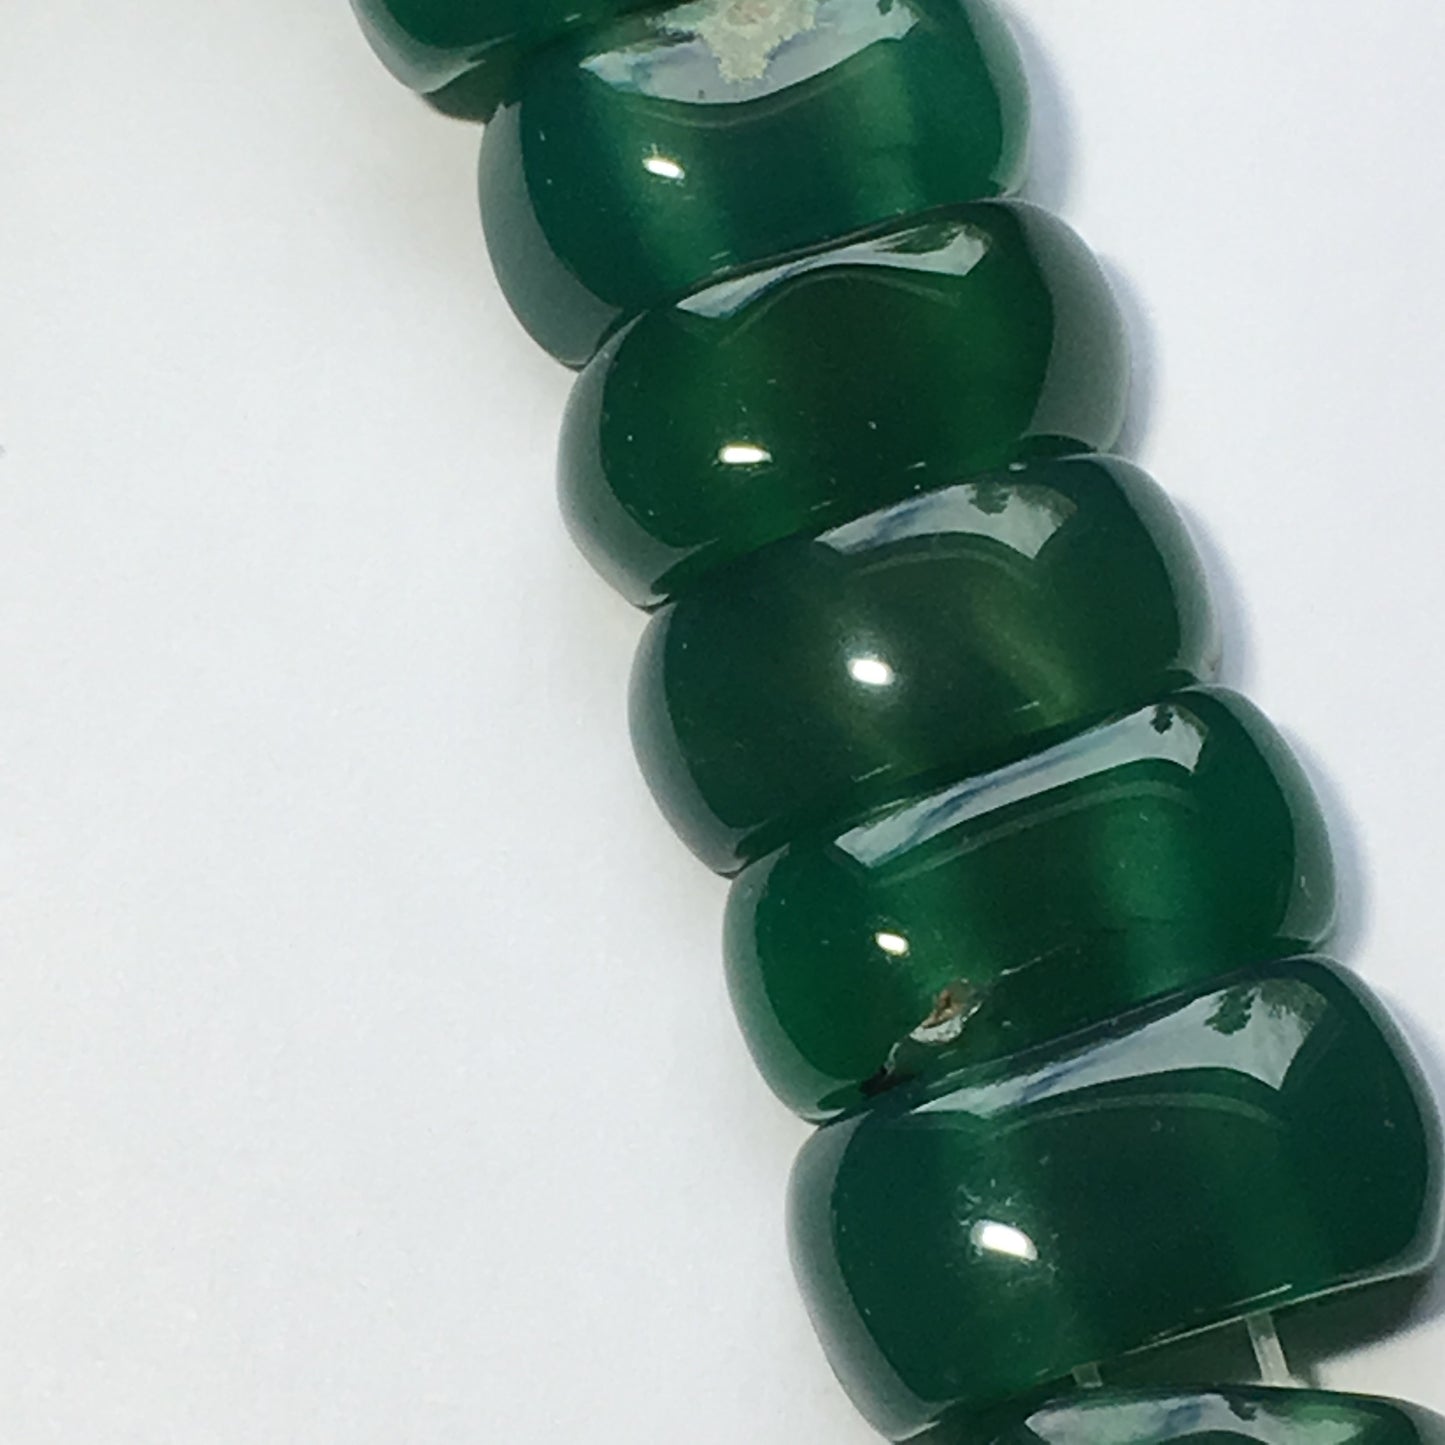 Green Chalcedony Semi-Precious Stone 2-Hole Slider Beads 20 x 10 mm - 13-Inch Strand; 35 Beads